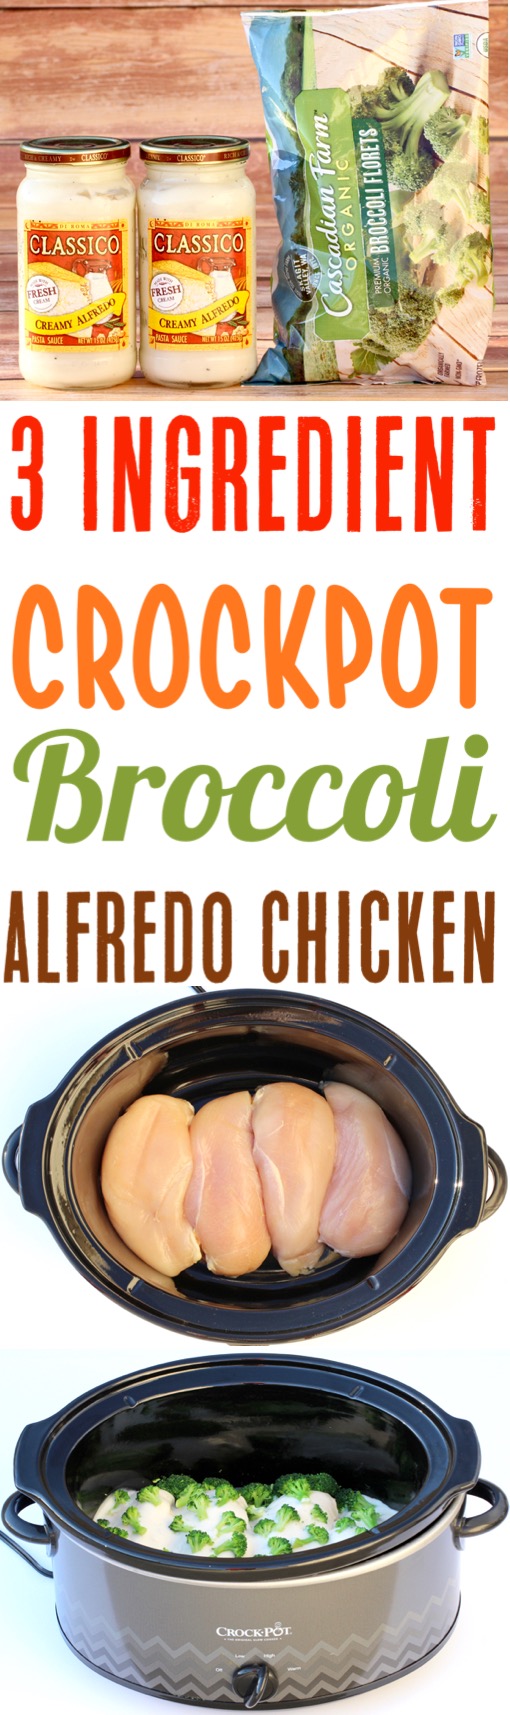 Crockpot Alfredo Chicken with Broccoli Recipe - Easy Slow Cooker Dinner Recipe